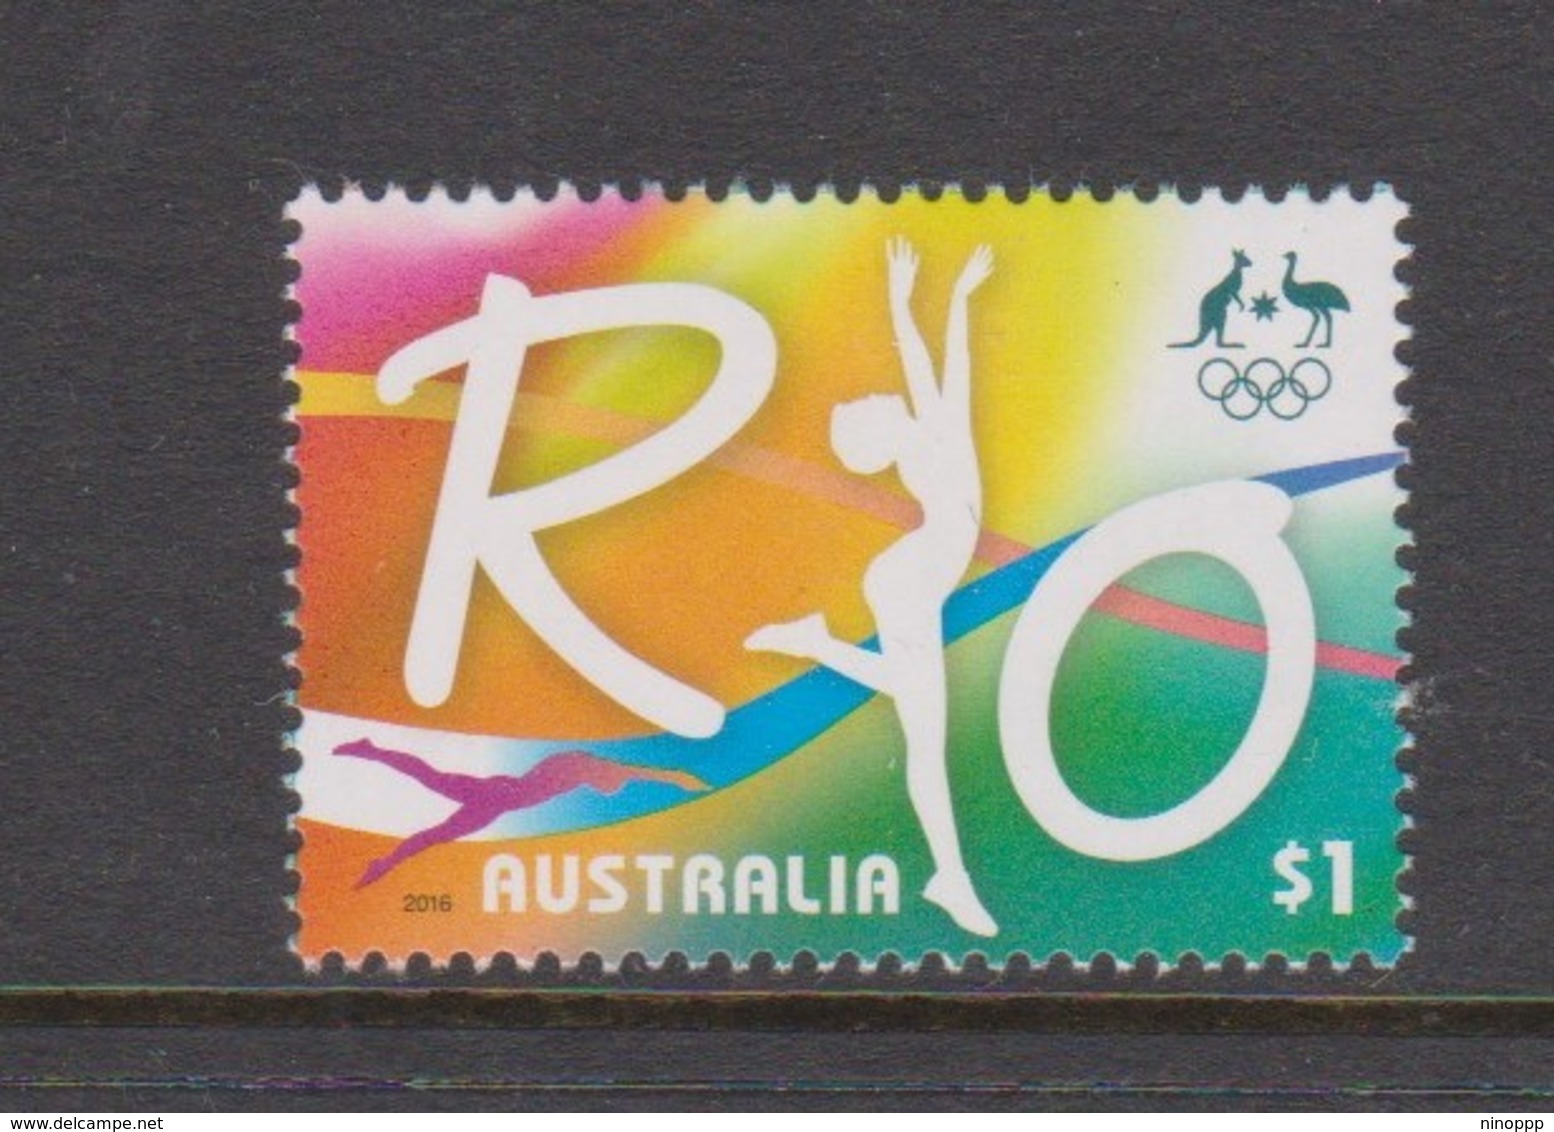 Australia ASC 3415 2016 Rio Olympics,mint Never Hinged - Mint Stamps